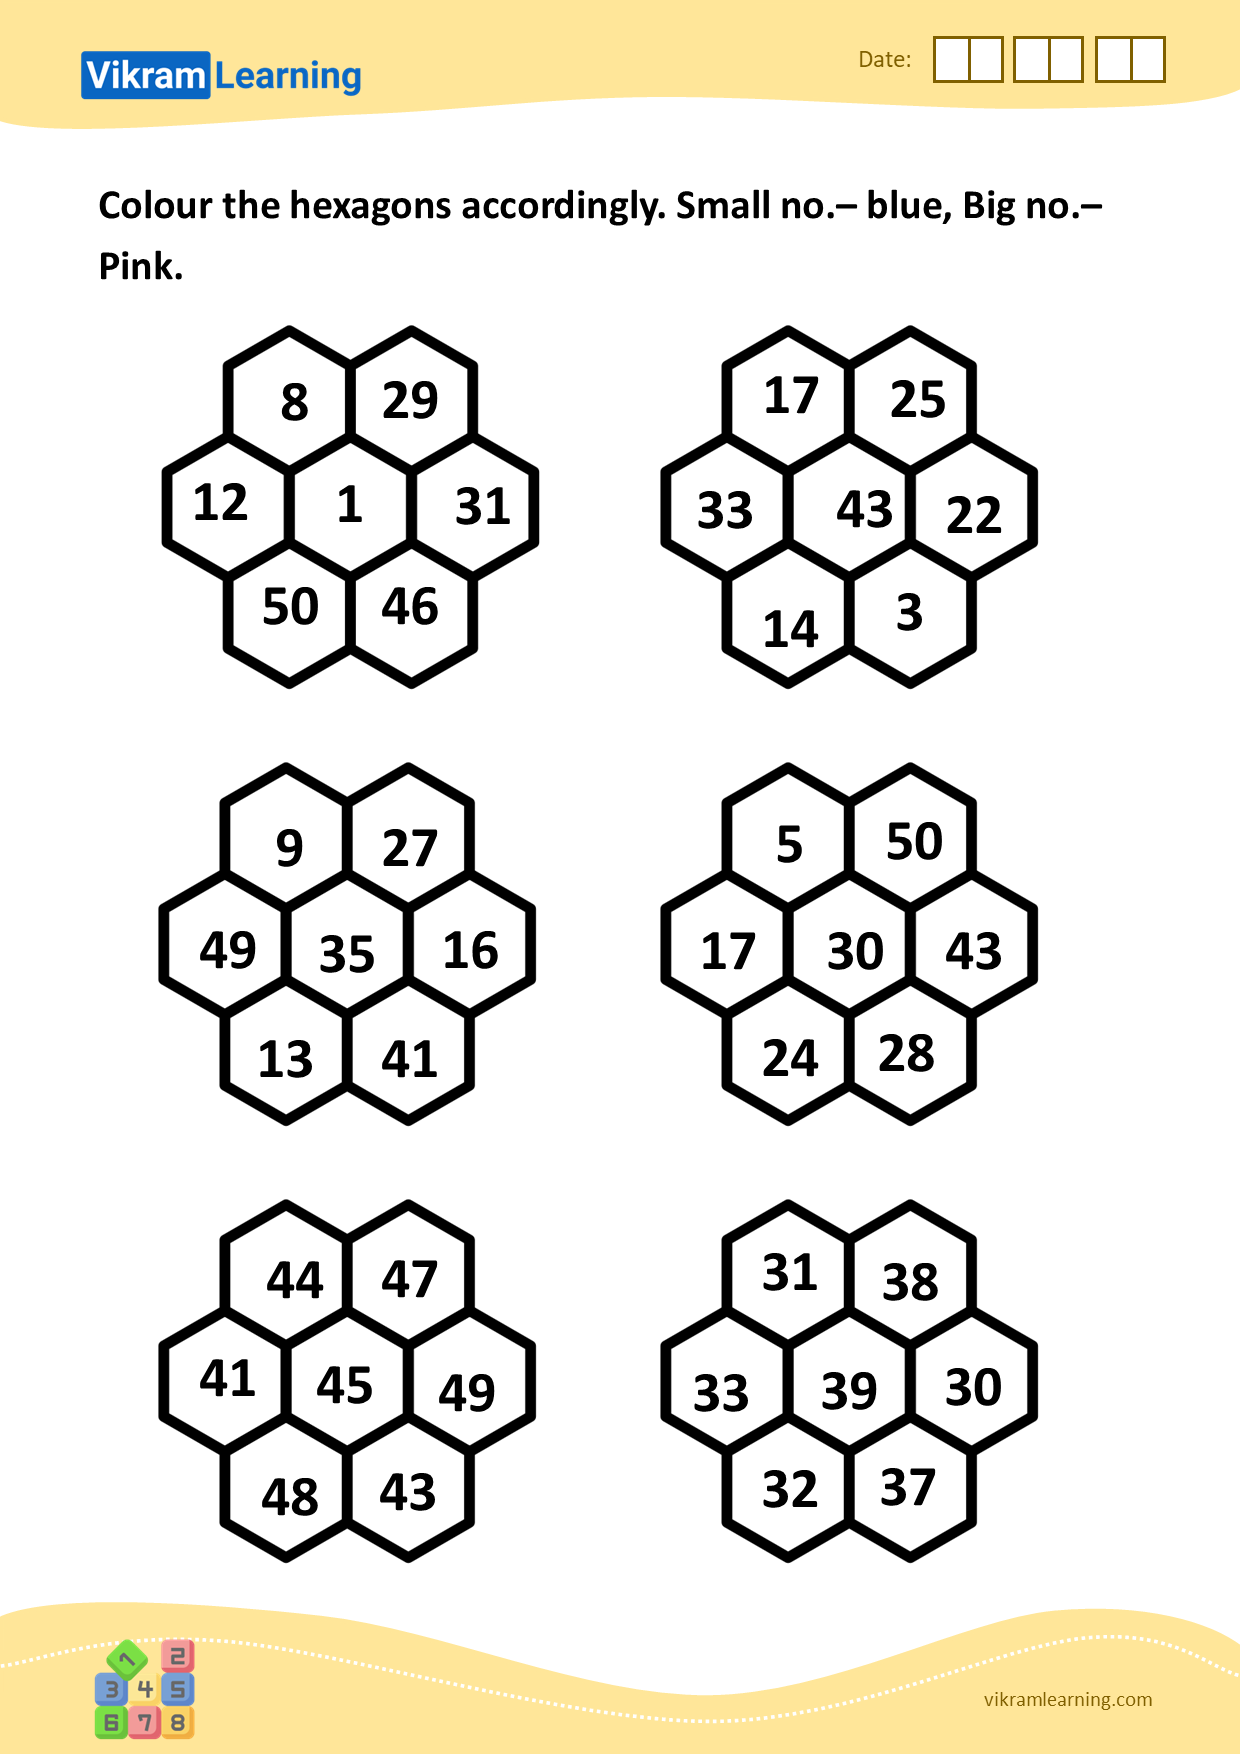 Download colour the hexagons accordingly. small no.– blue, big no.– pink worksheets